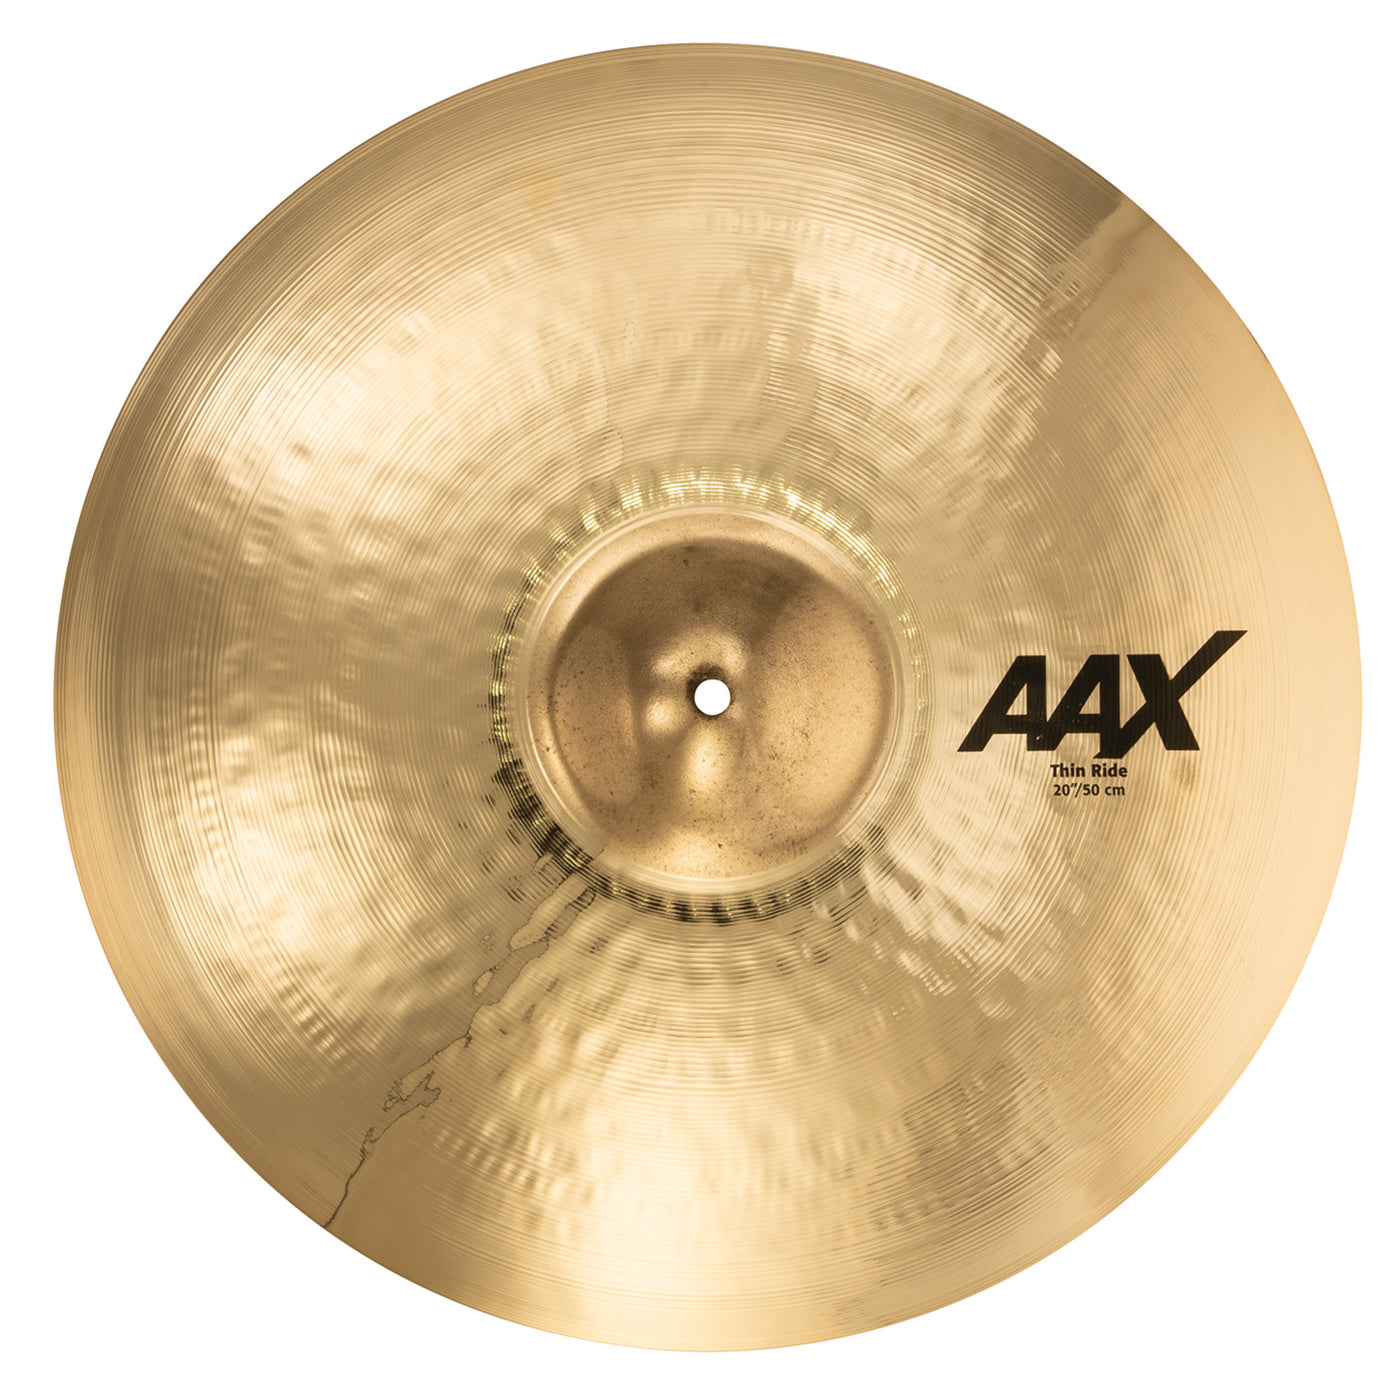 Sabian 20" AAX Thin Ride Cymbal - Brilliant Finish